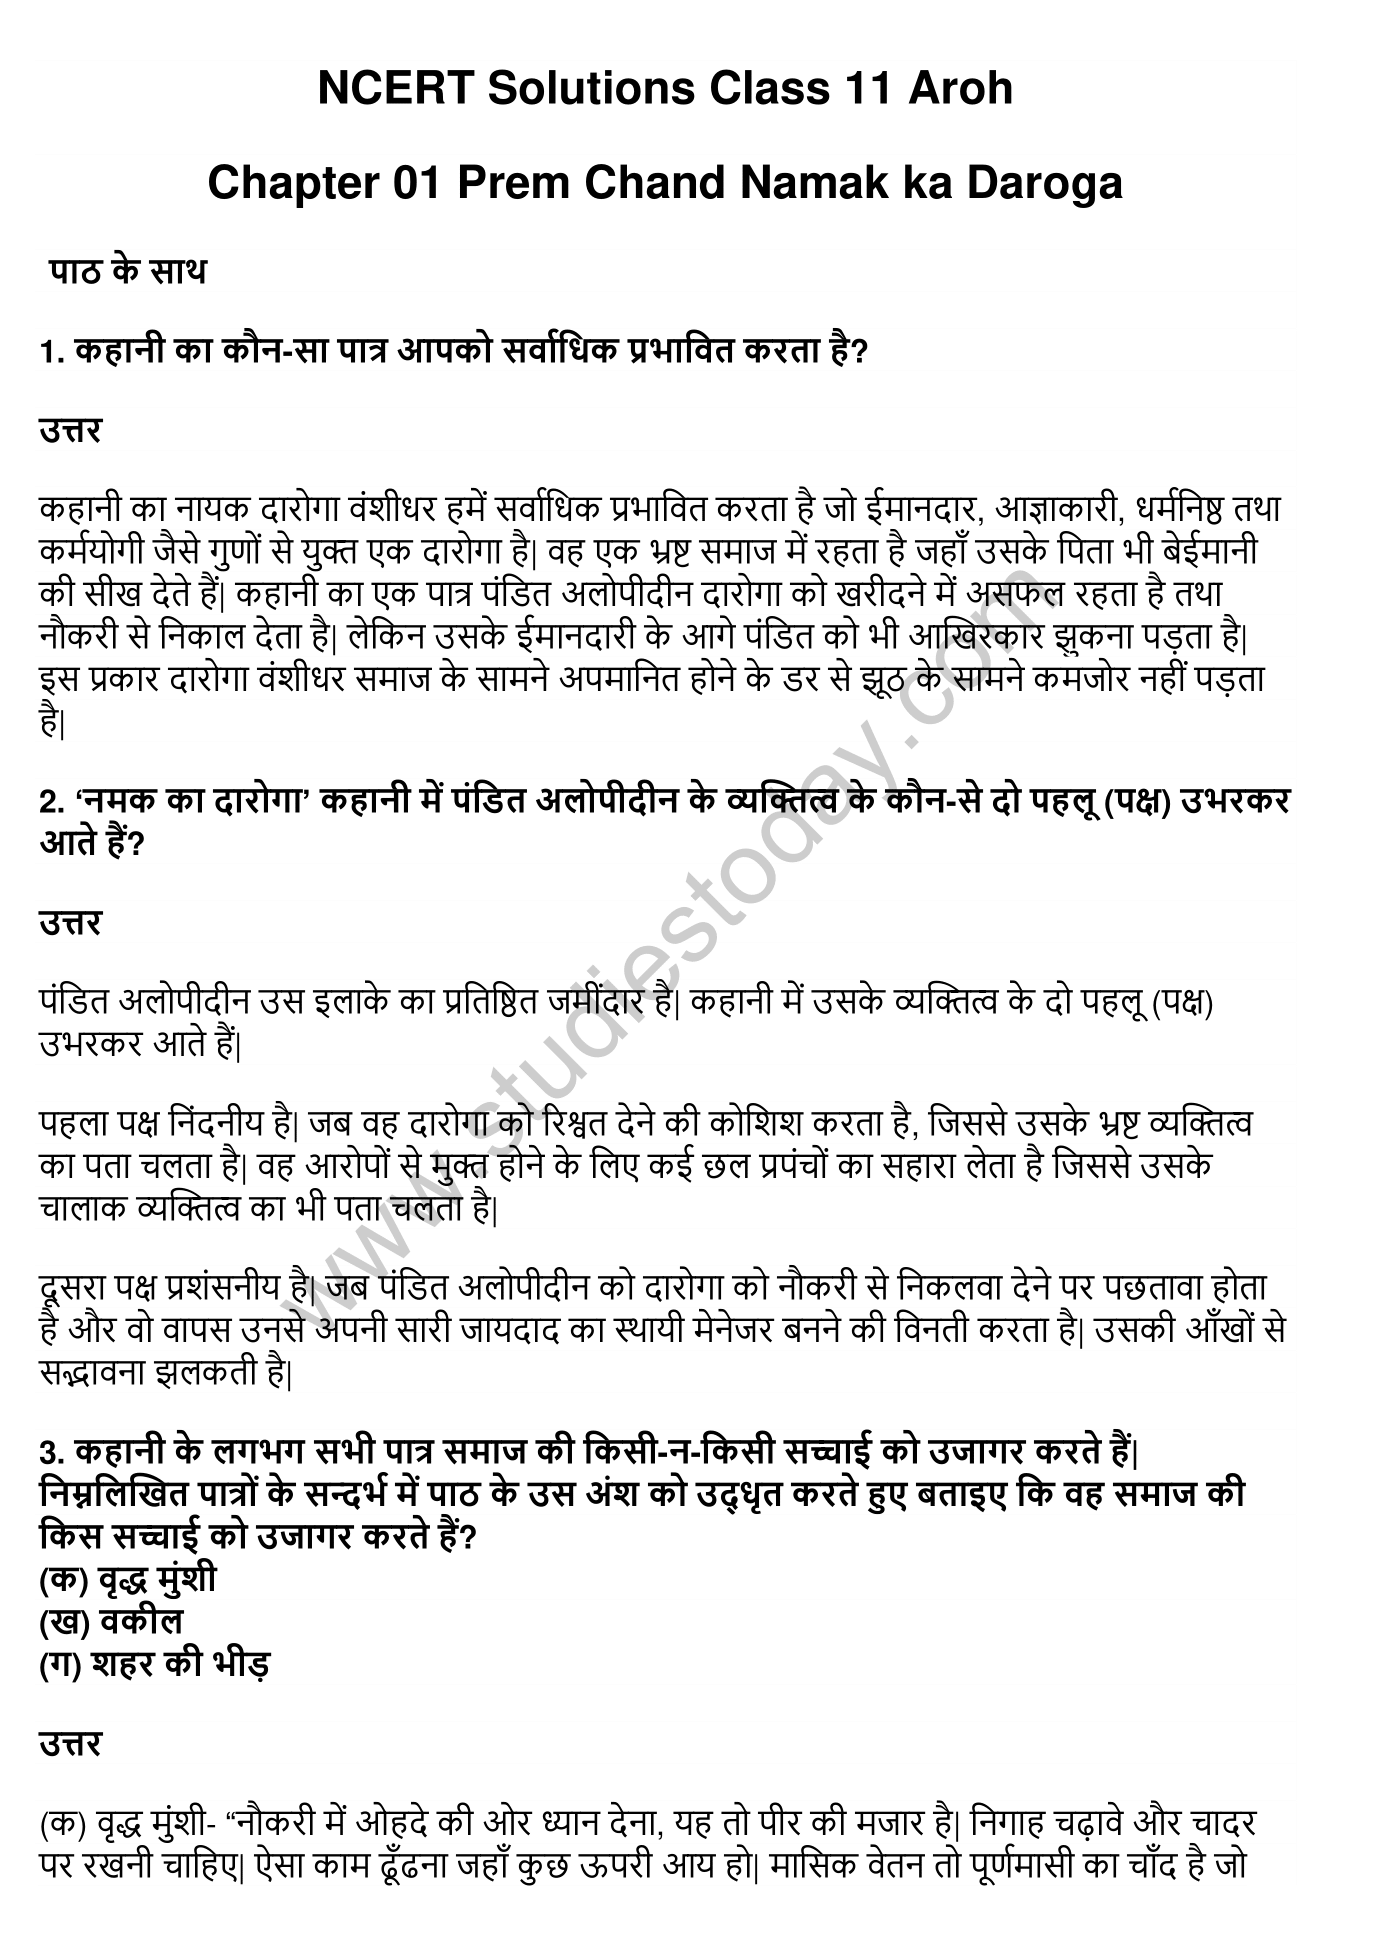 NCERT-Solutions-Class-11-Hindi-Aroh-Prem-Chand-1